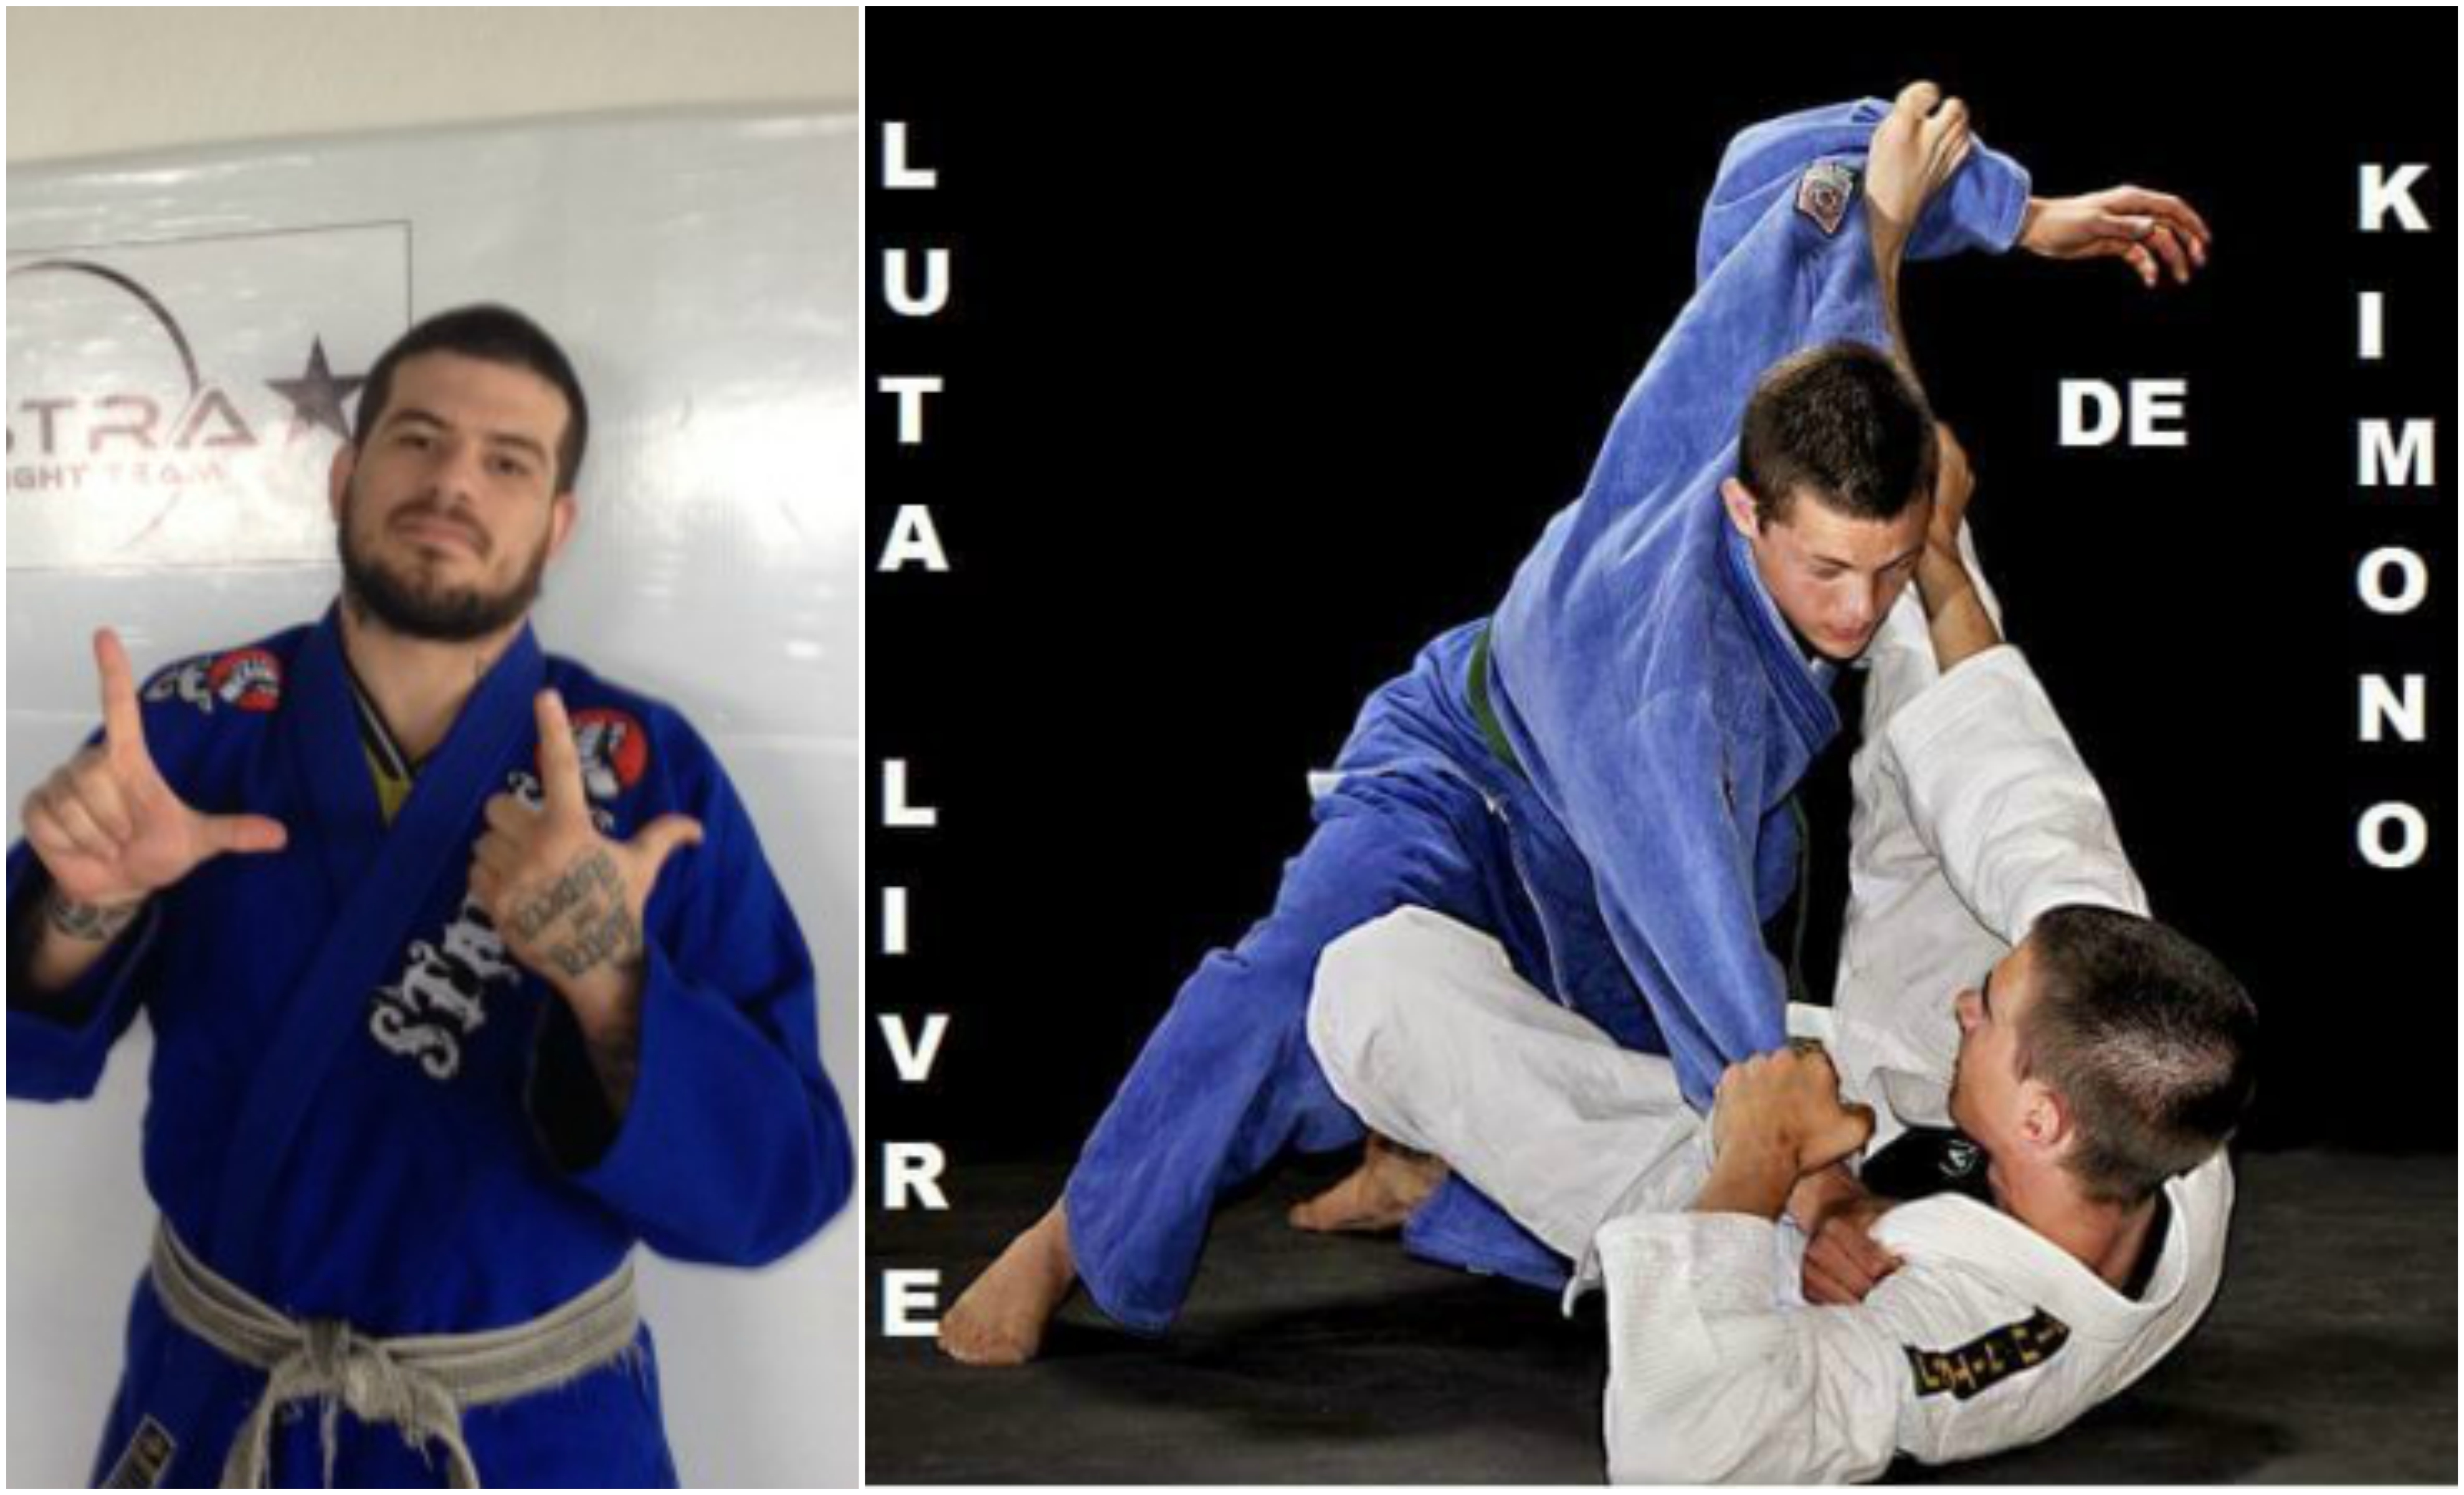 Luta Livre - Brazilian Freestyle Fighting